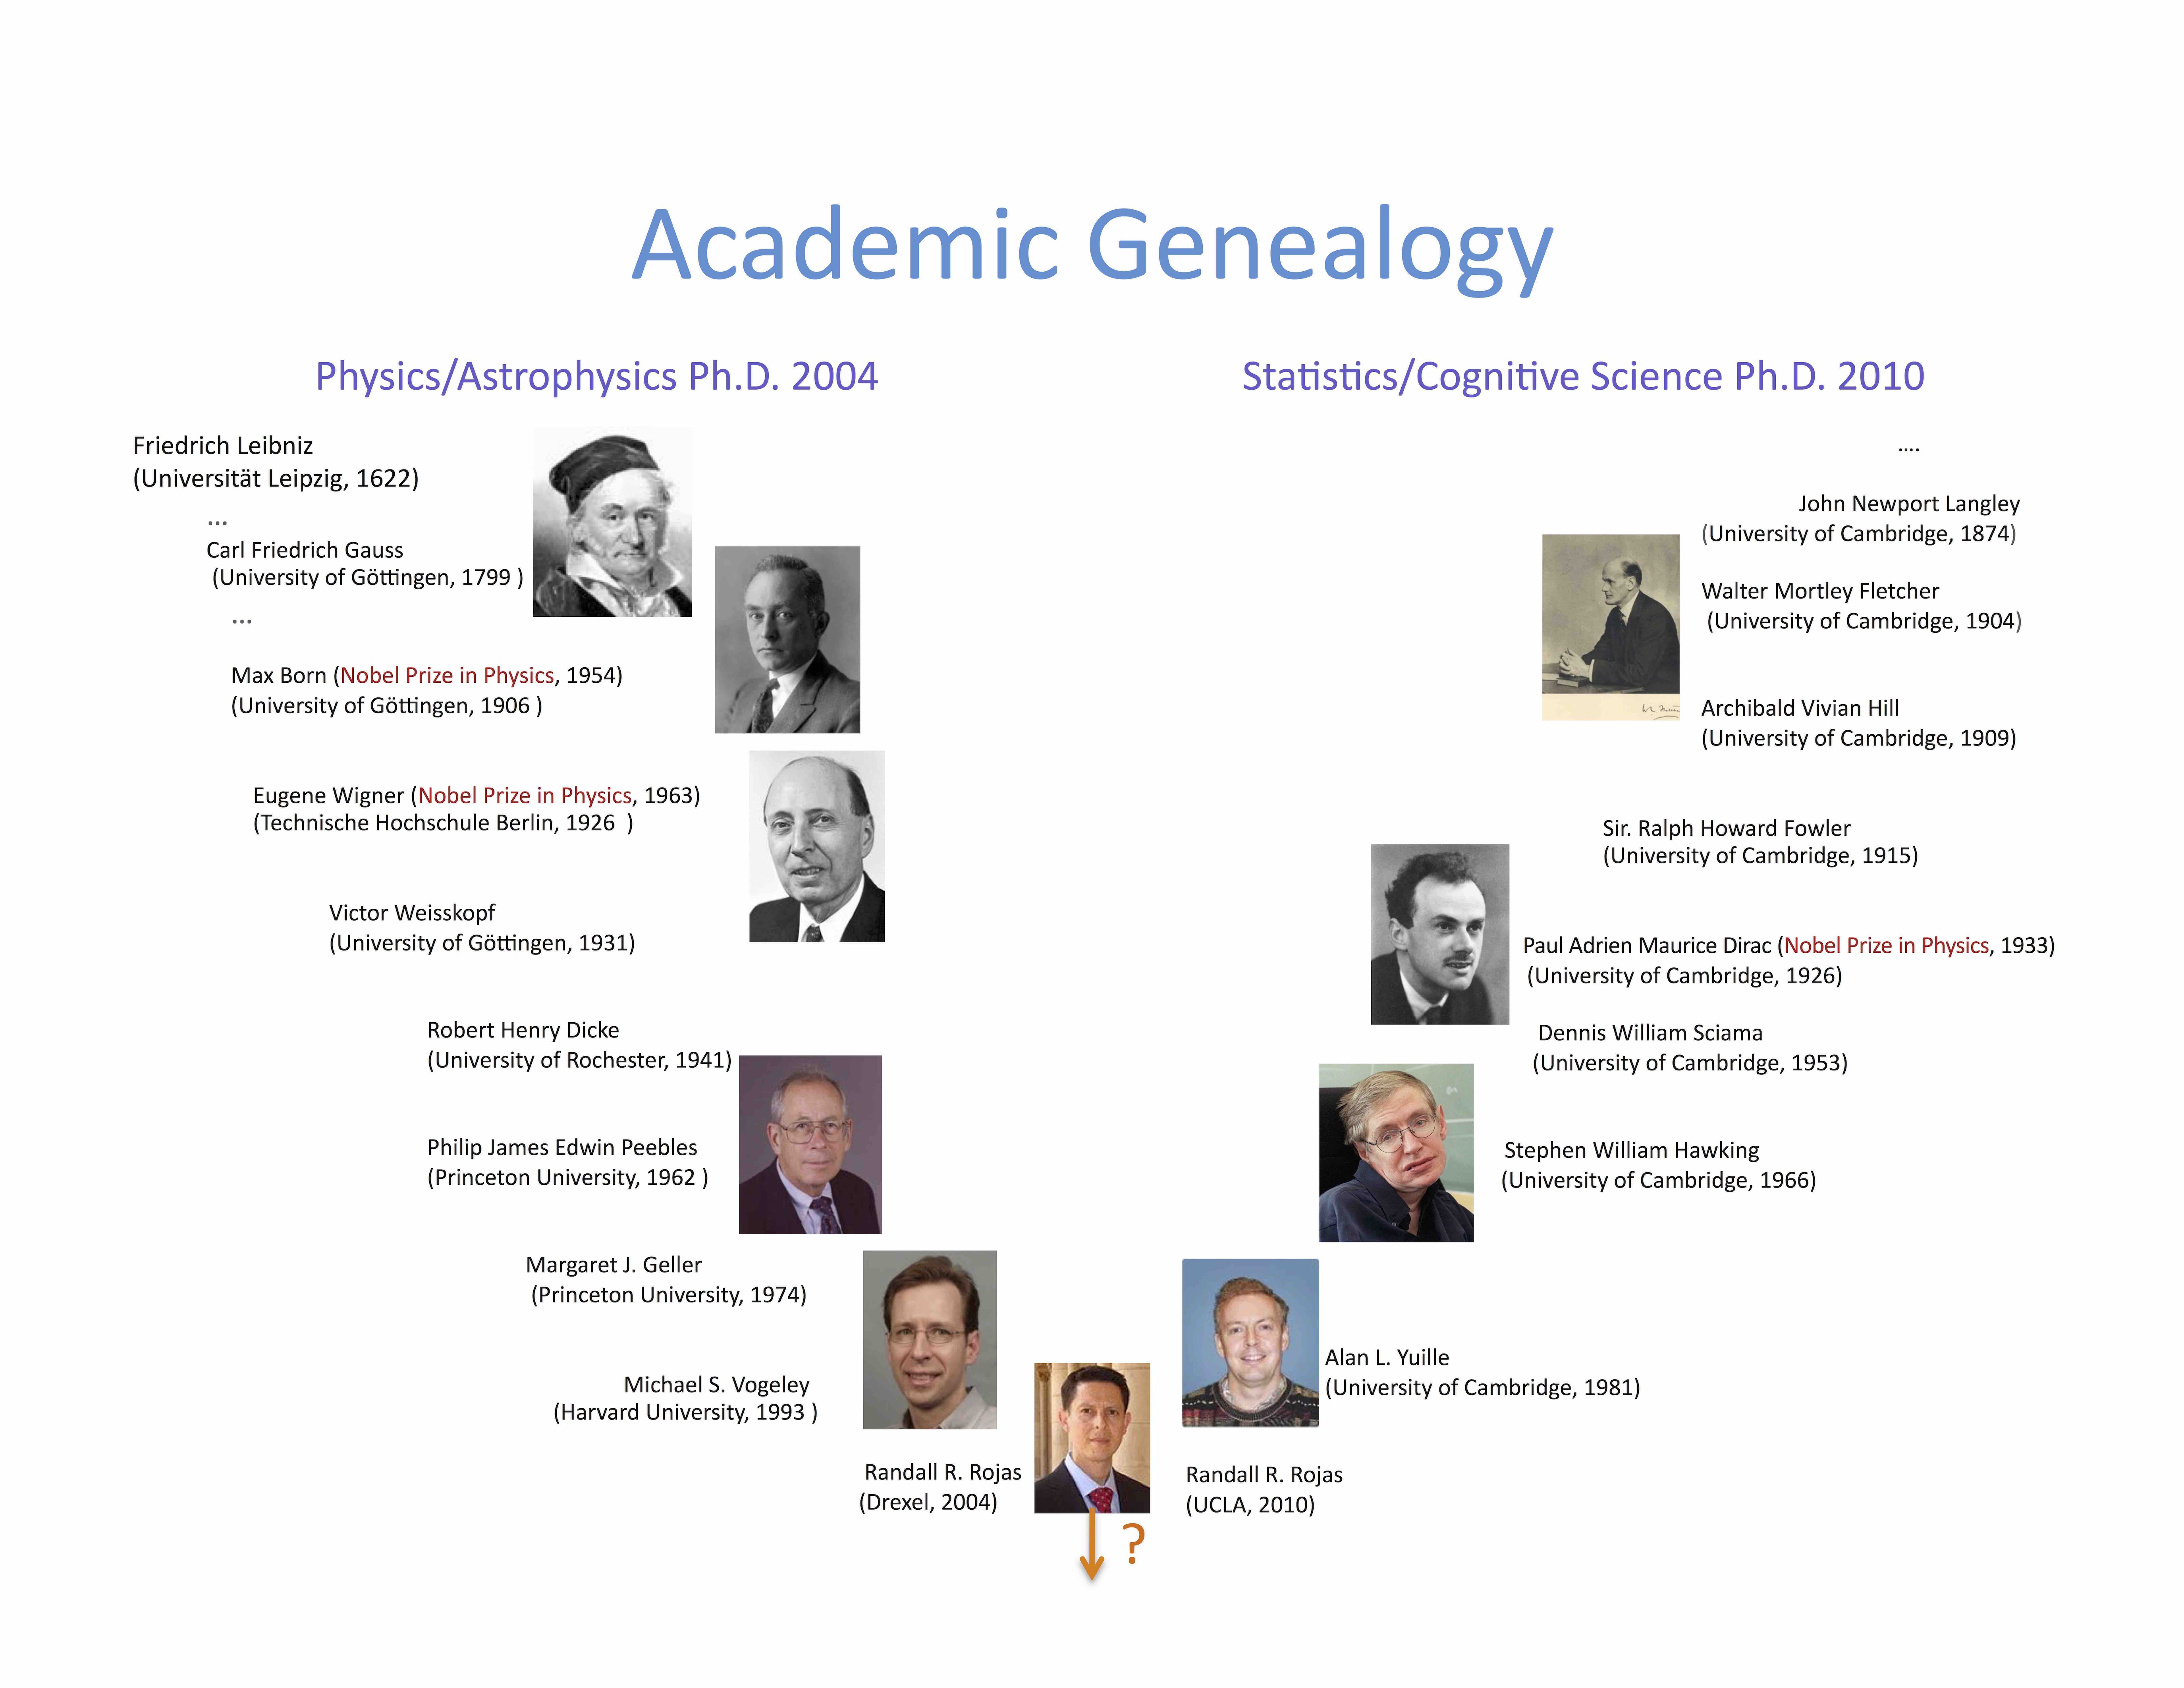 Dr. Randall R. Rojas Academic Genealogy